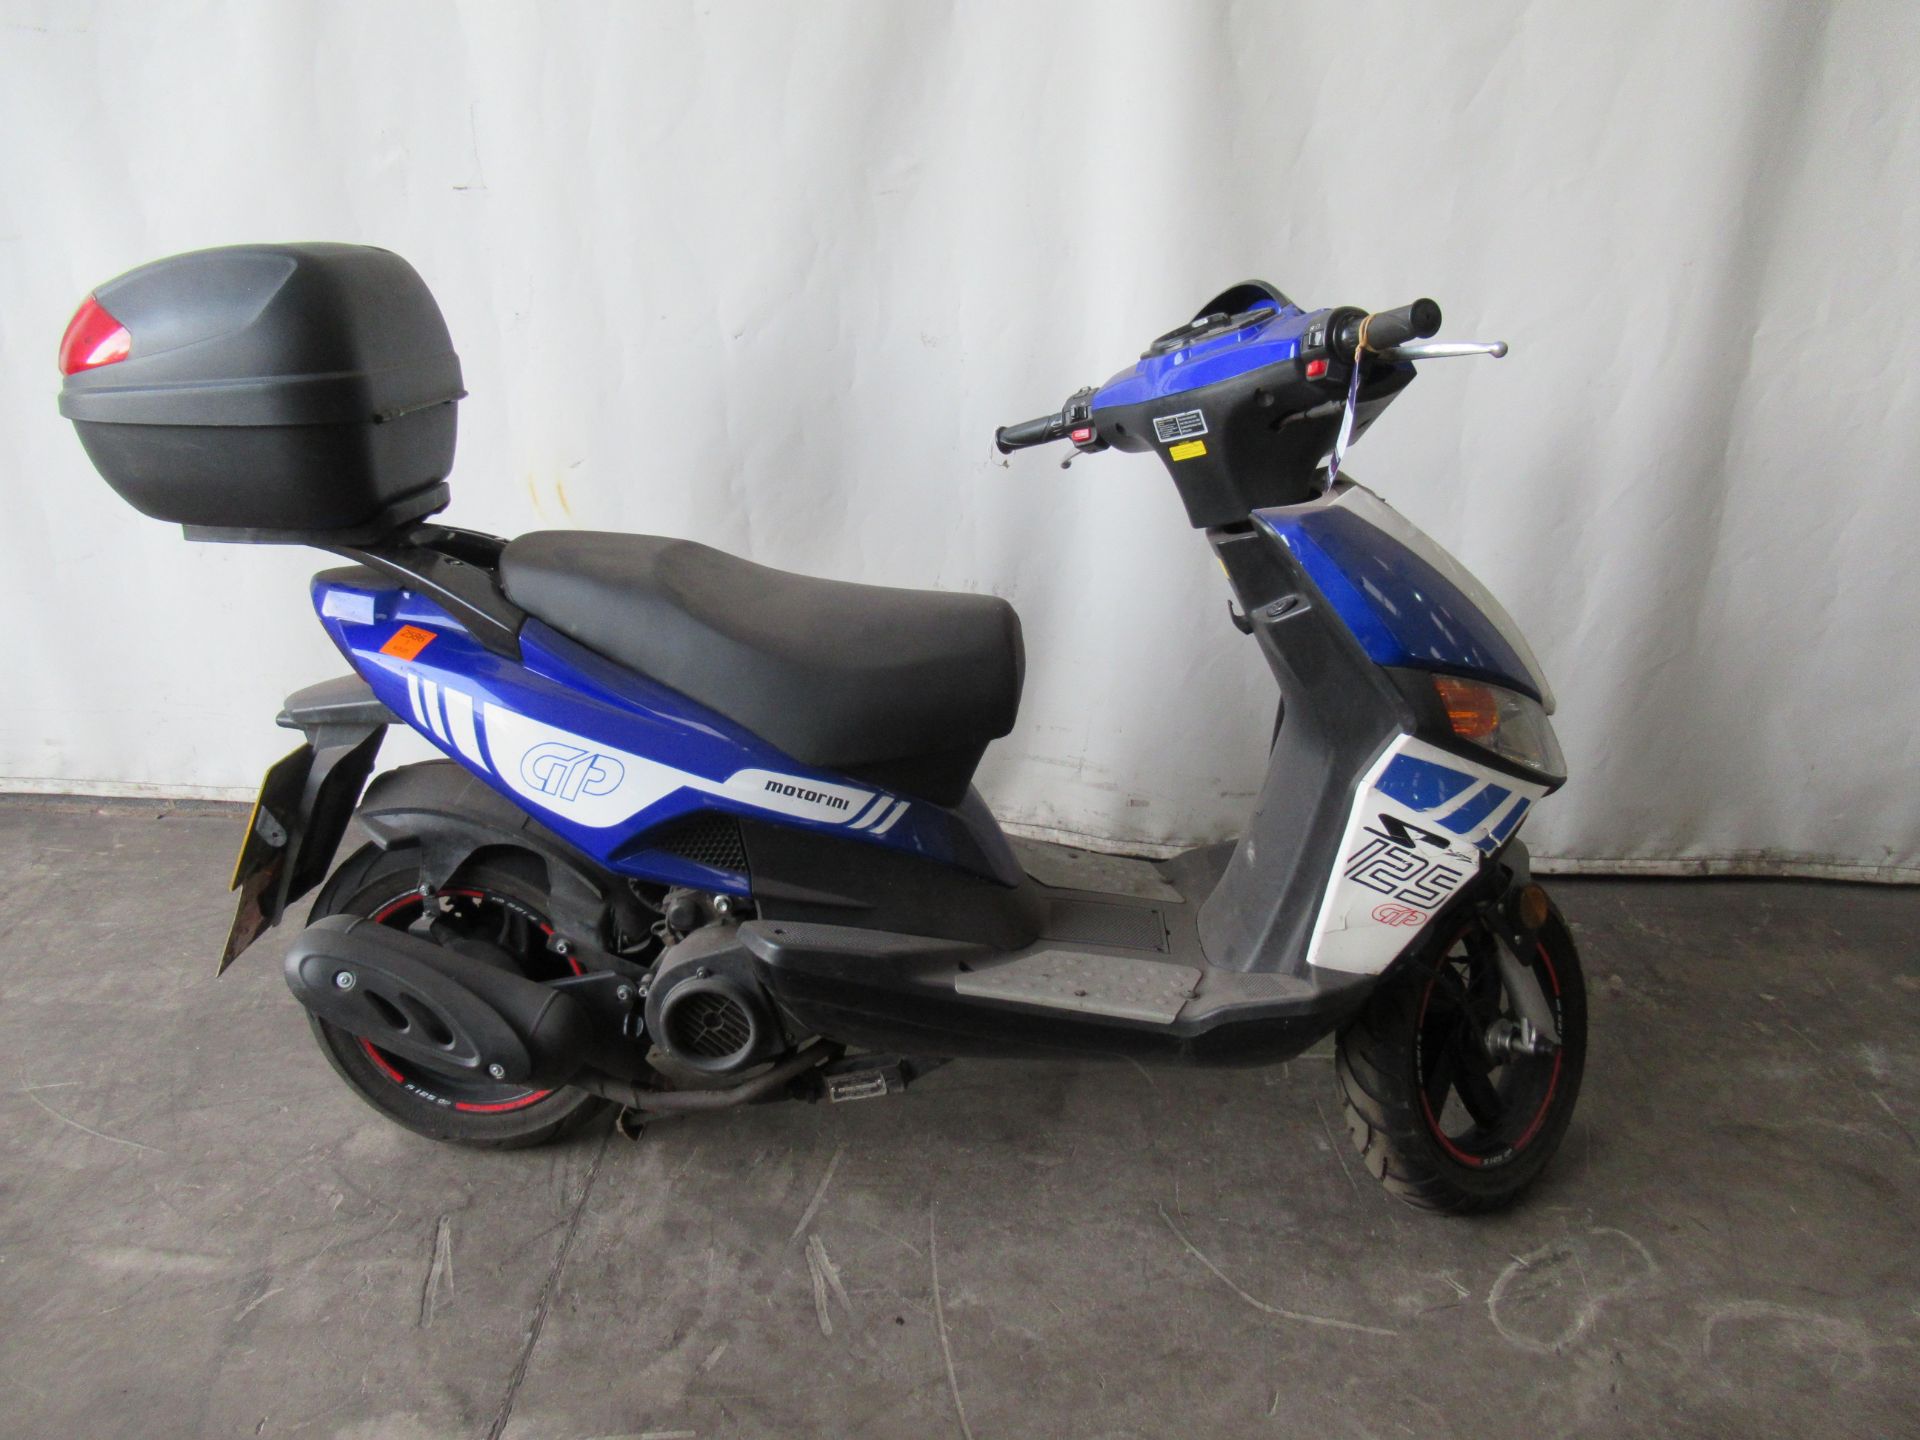 3x Motorini GP125i motorbikes - Image 2 of 30